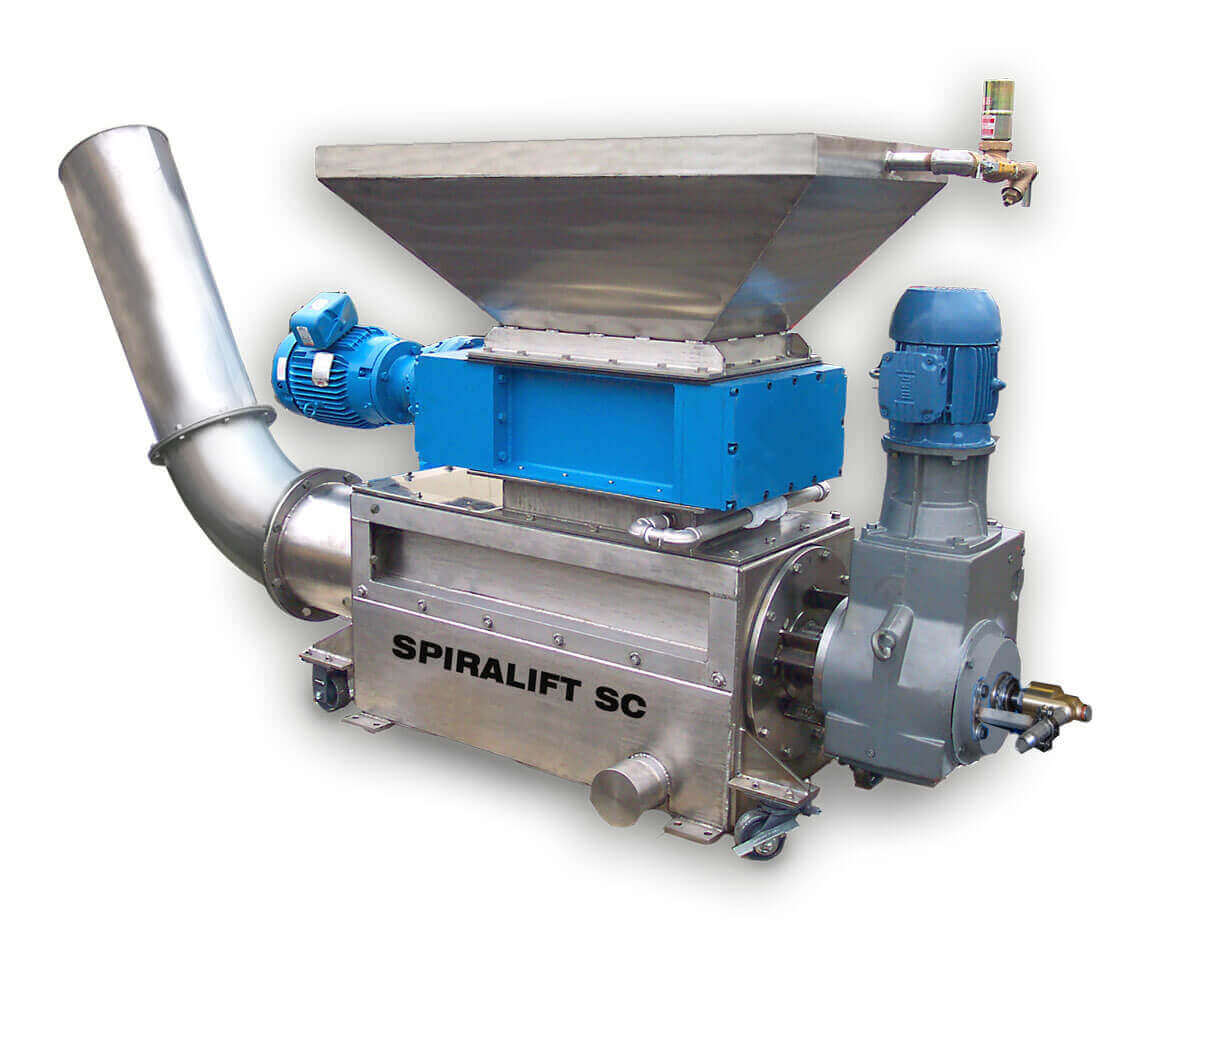 Spiralift SC Screenings Washer / Compactor